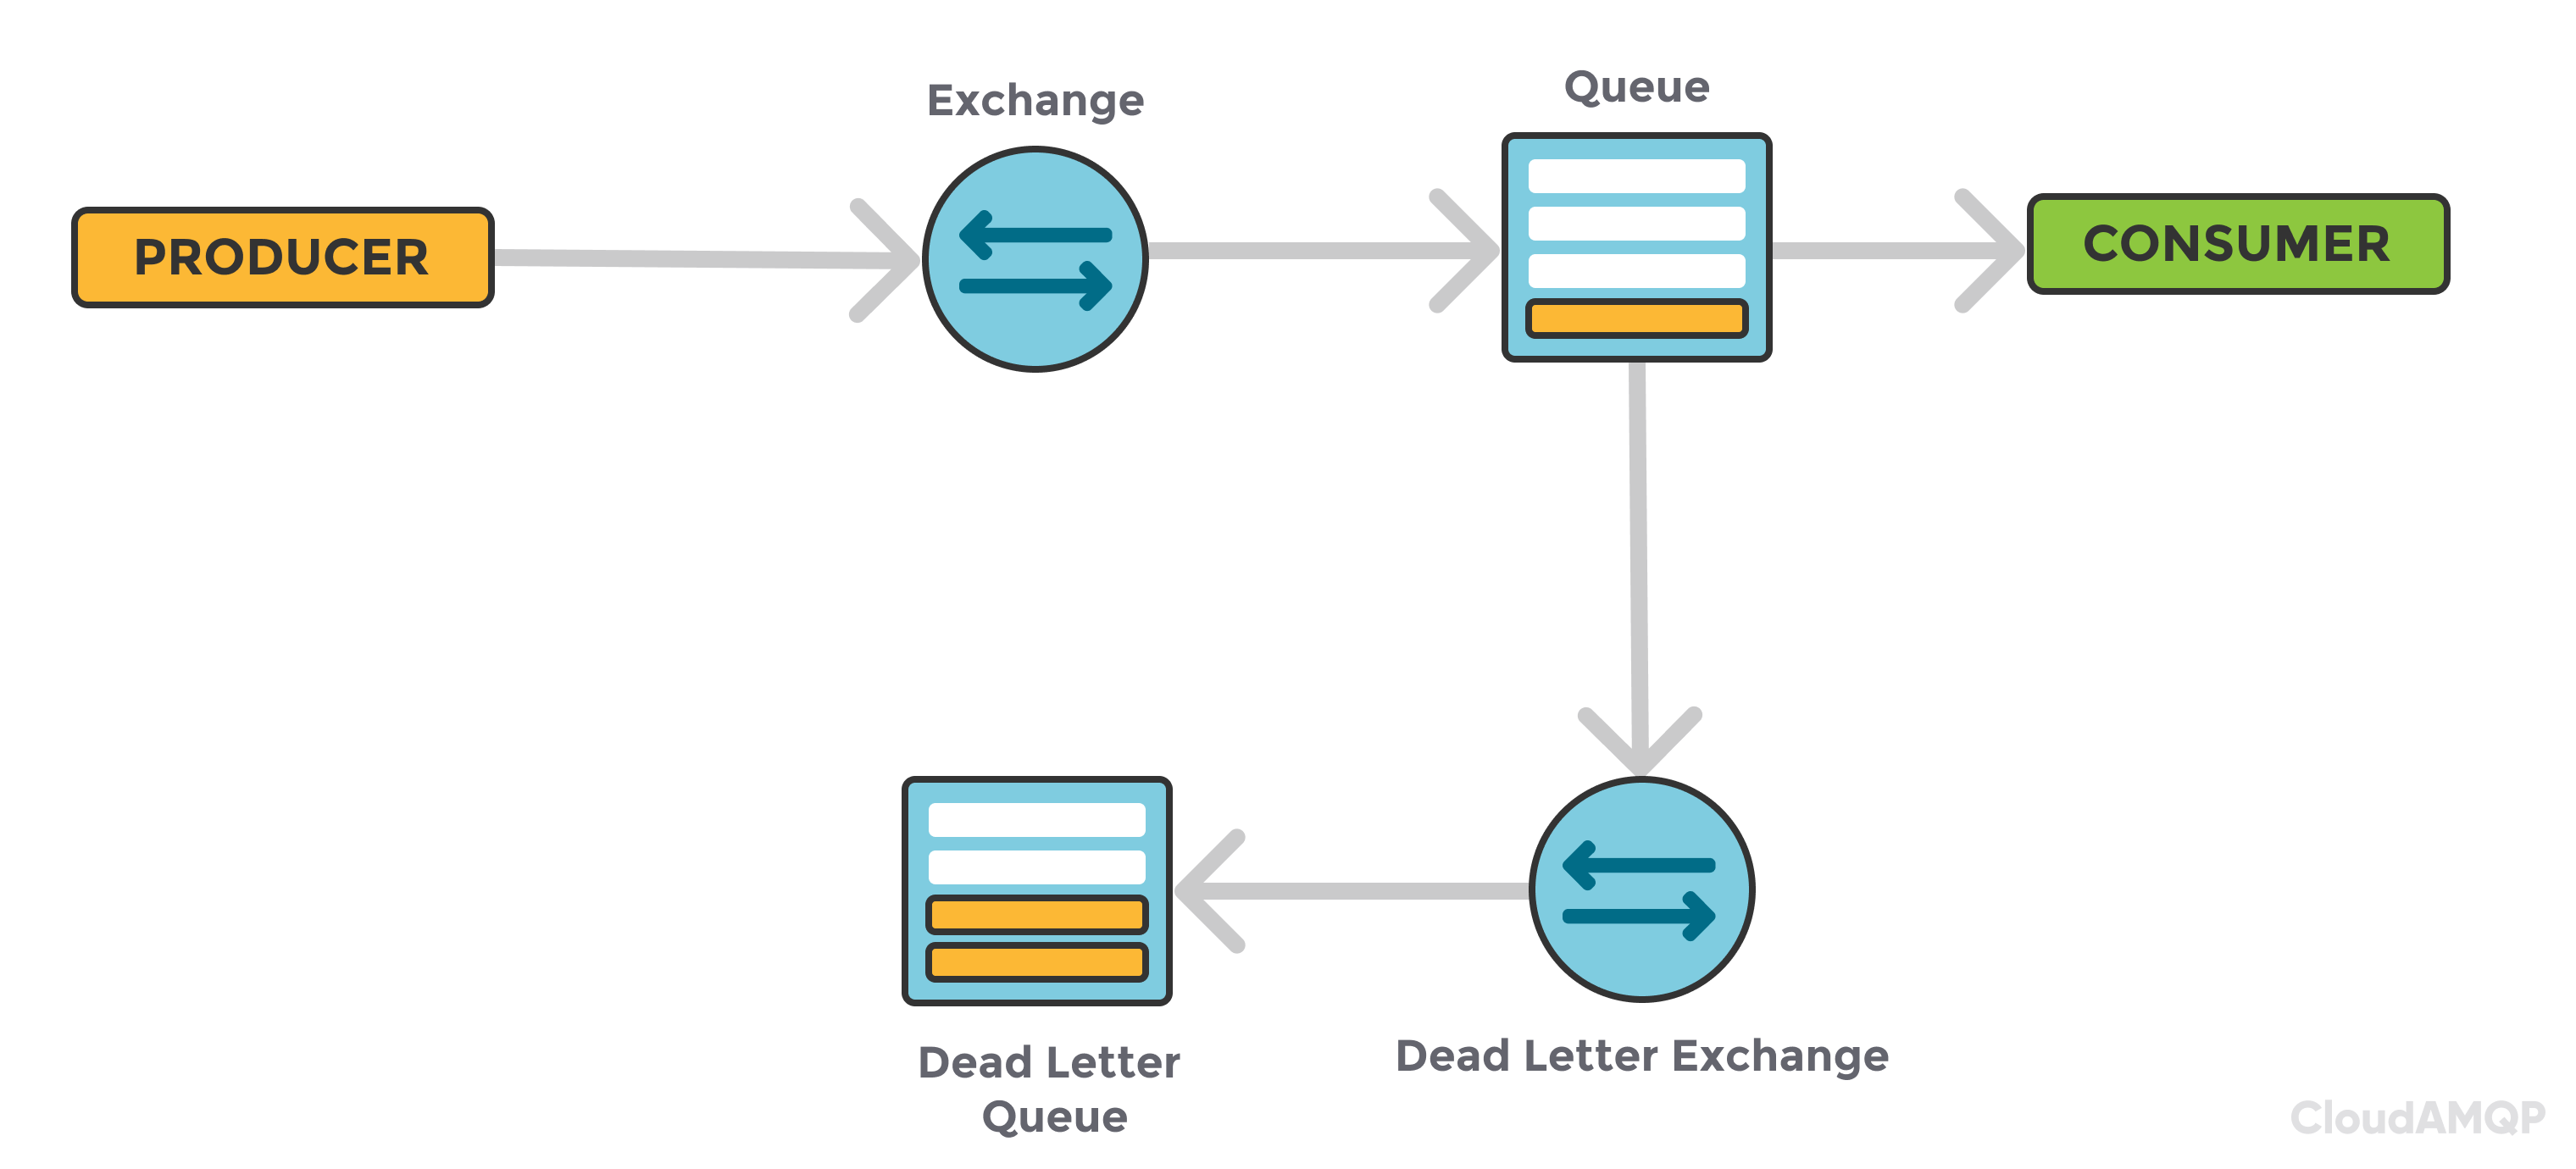 dead-letter-exchange-1